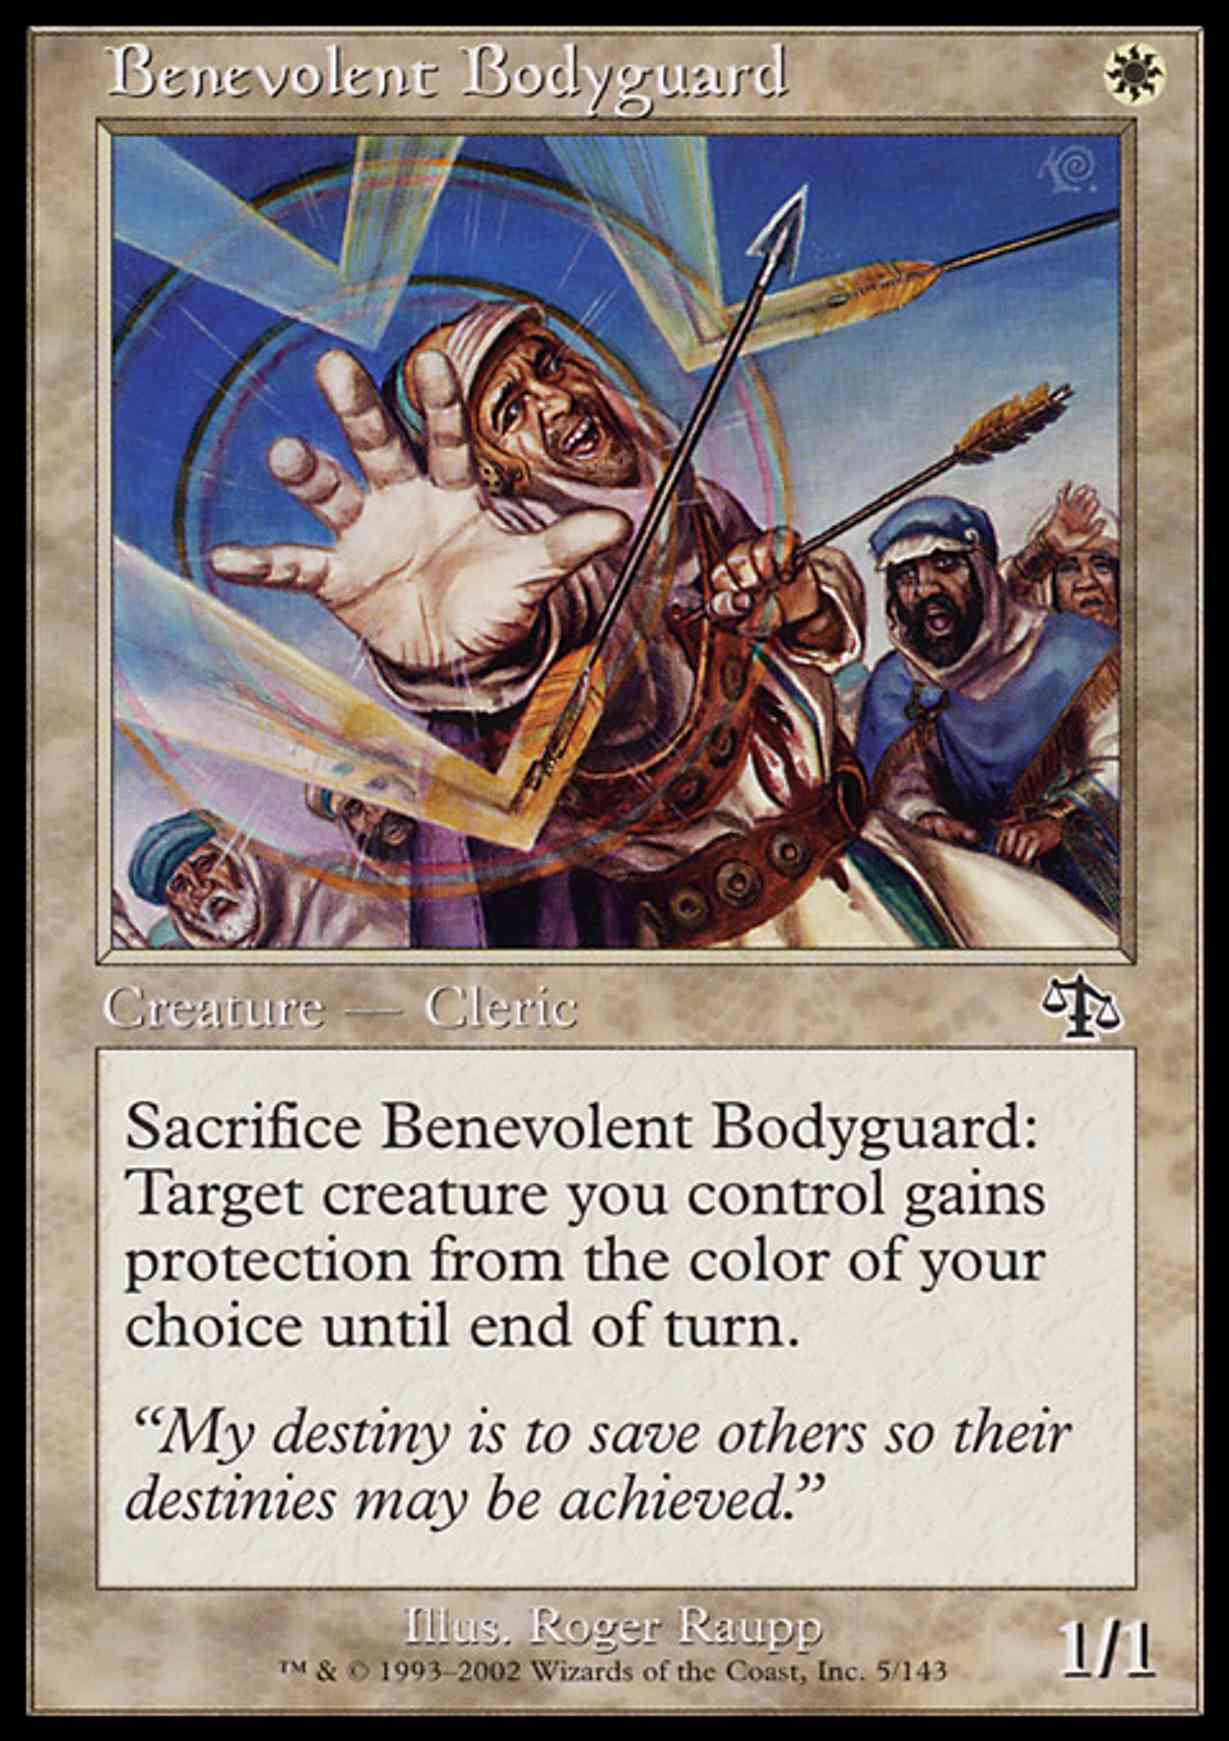 Benevolent Bodyguard magic card front